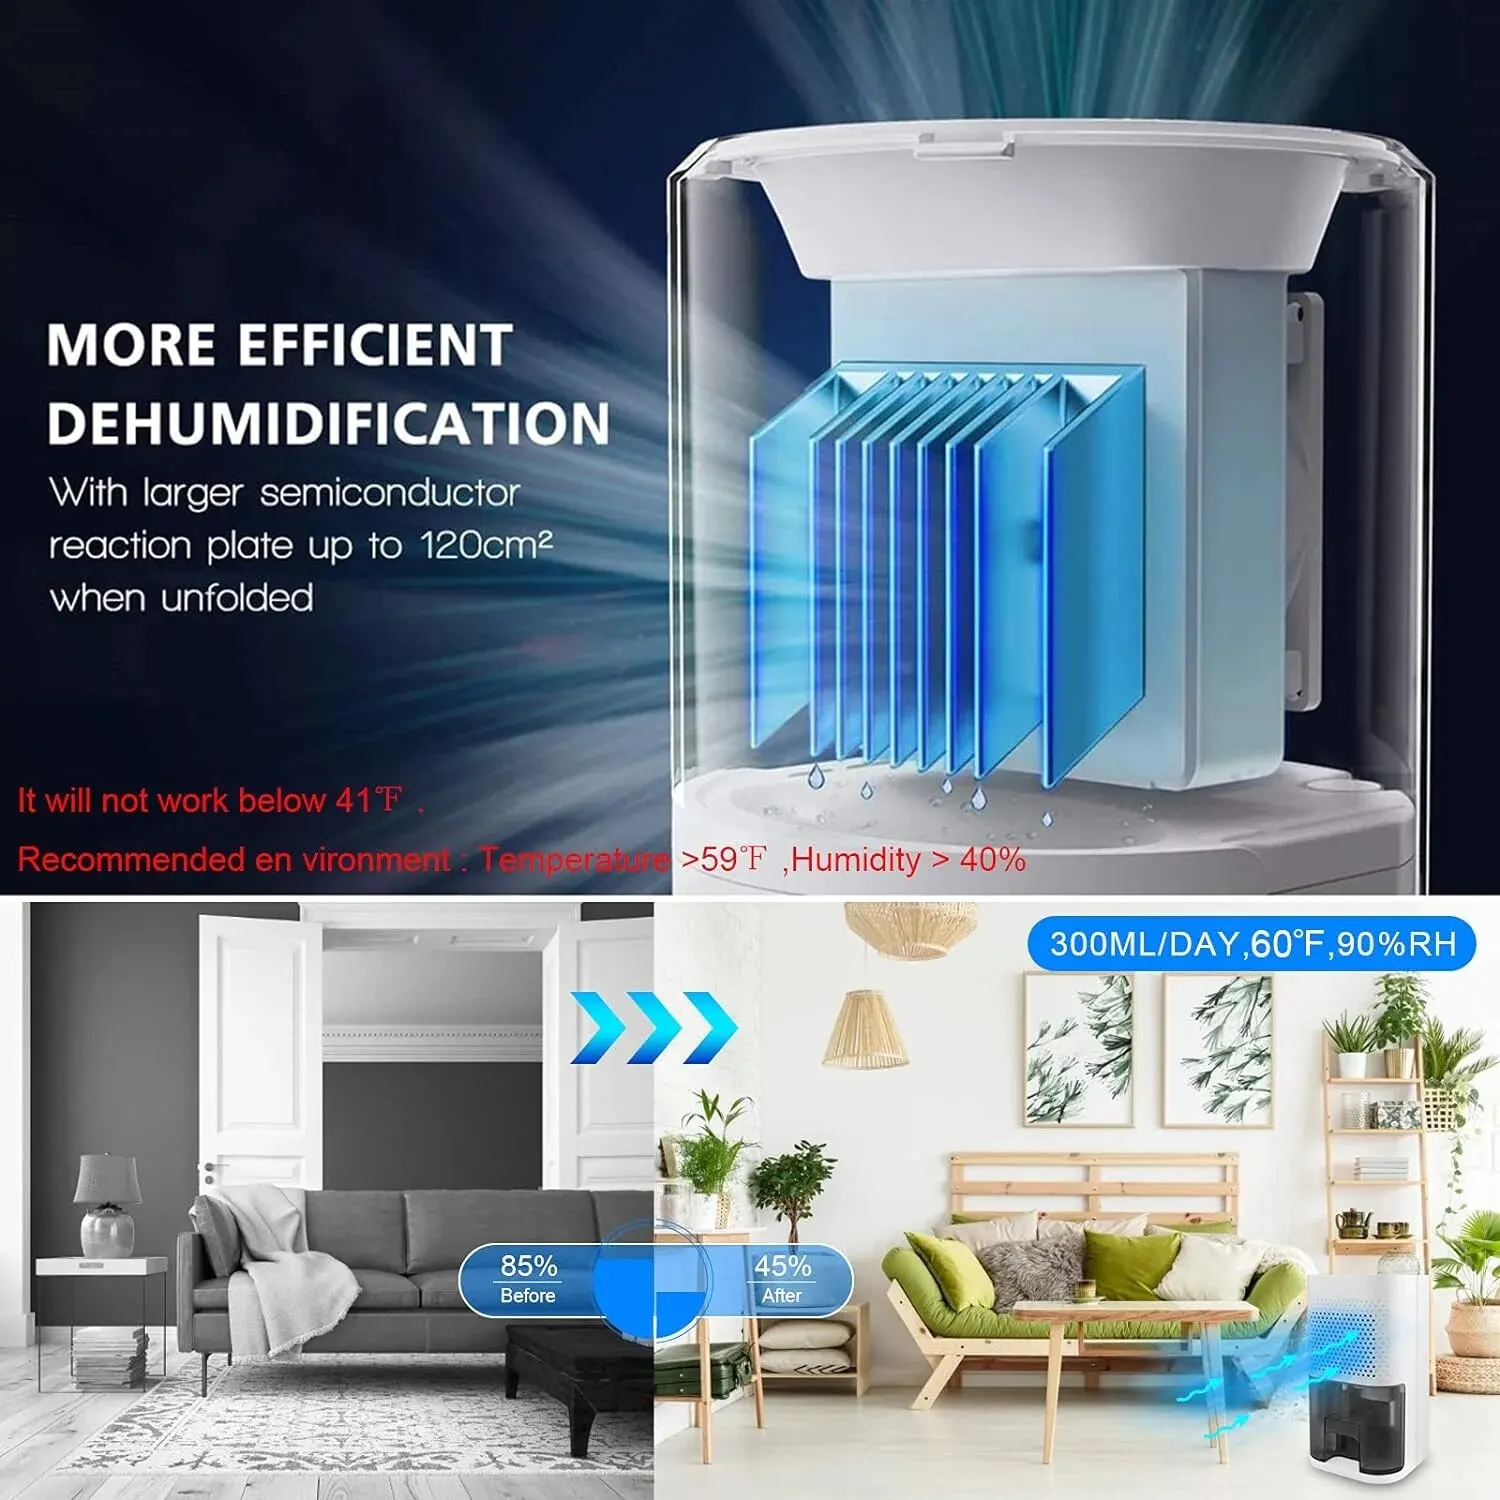 Small Quiet 850ml Portable Electric Dehumidifier for Damp Home, Room, Bedroom, Bathroom Wardrobe, Basement, Office